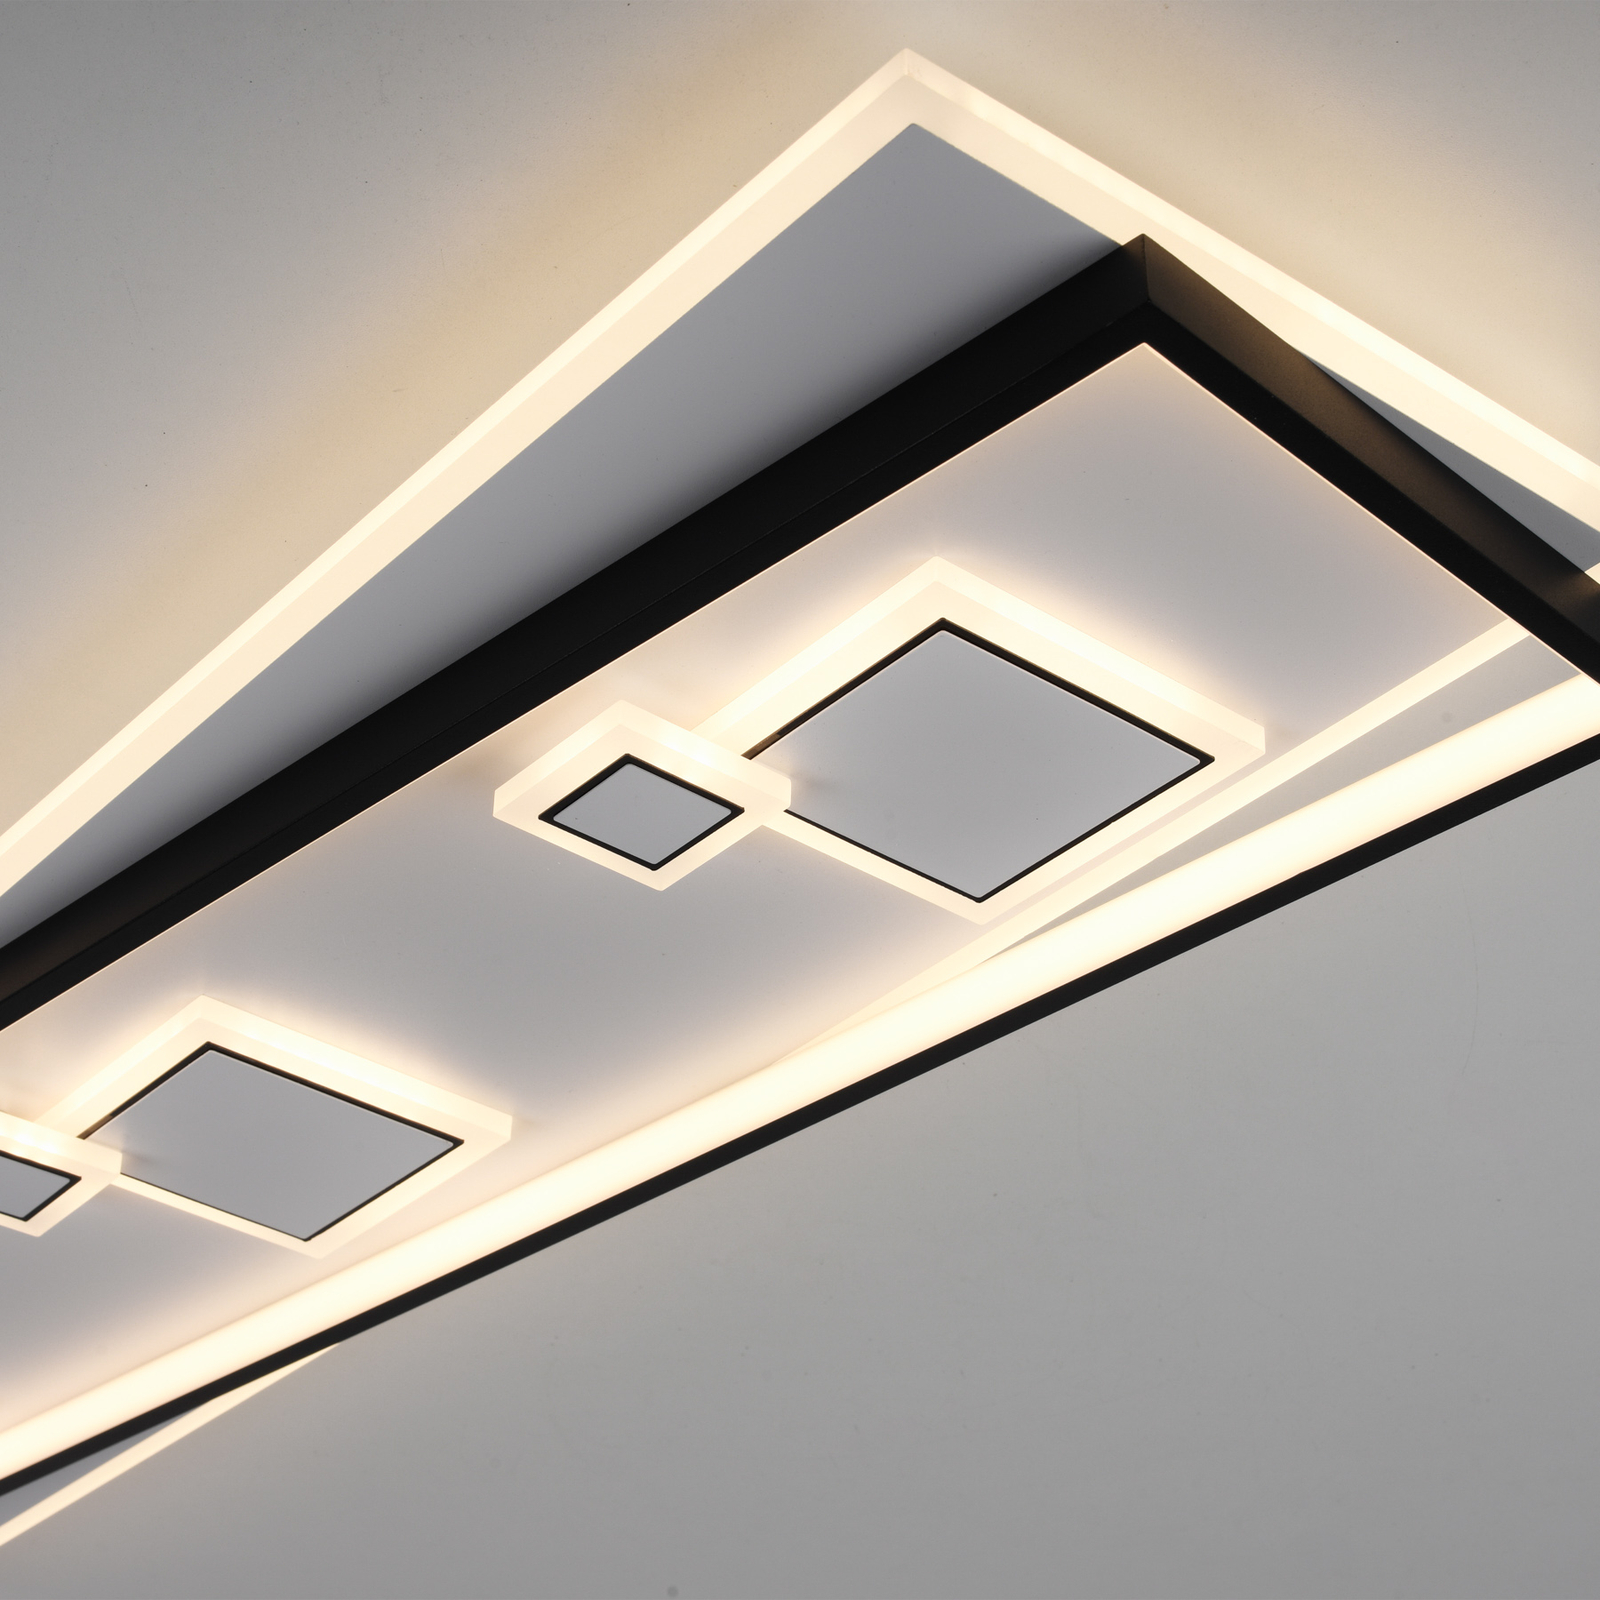 Mailak LED ceiling light, 97 cm long